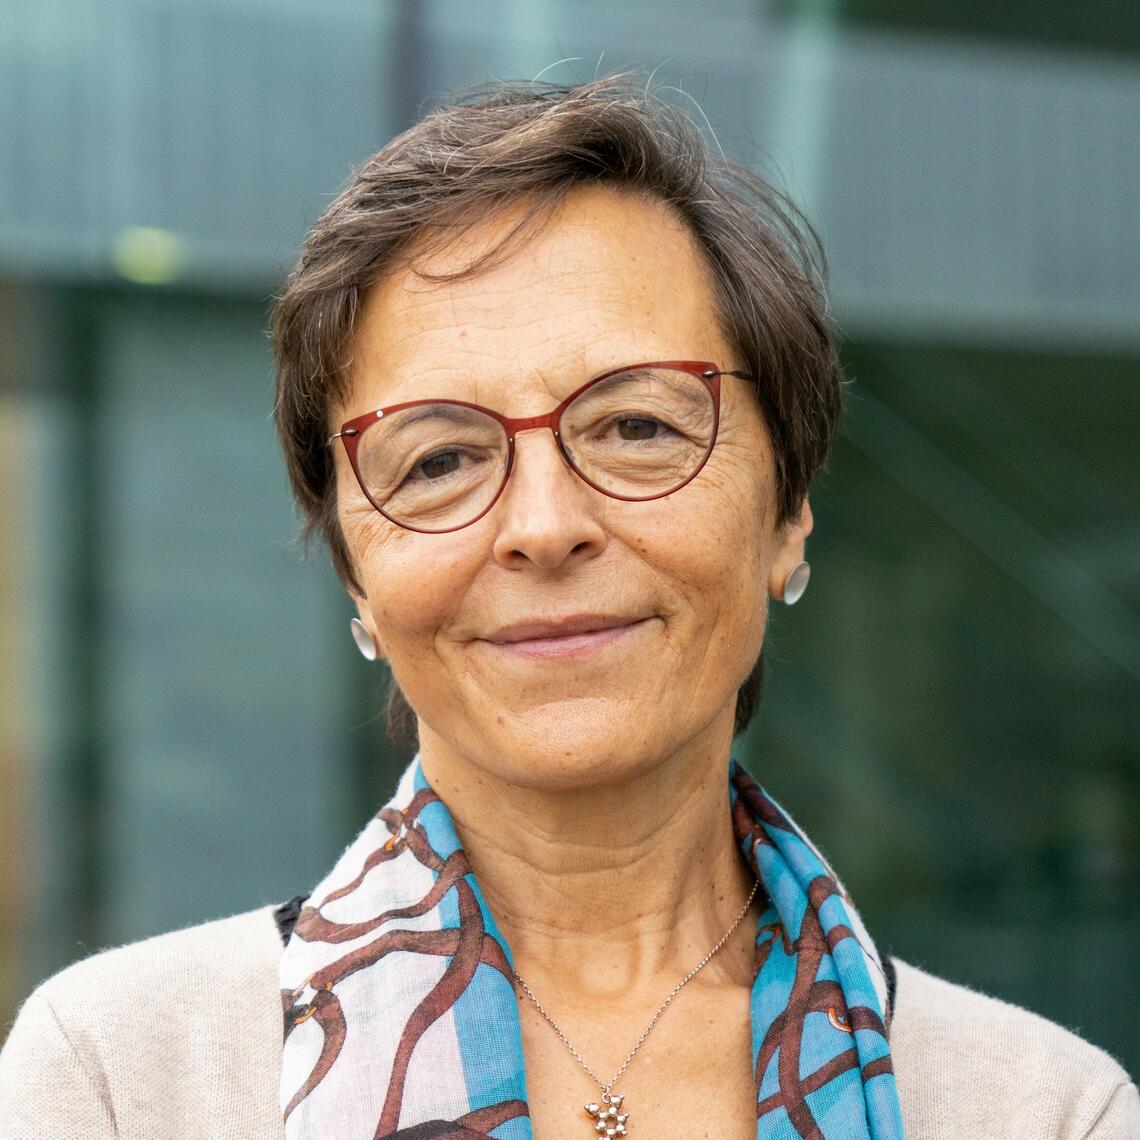 Dr Carmen Sandi, Professor, EPFL, Switzerland